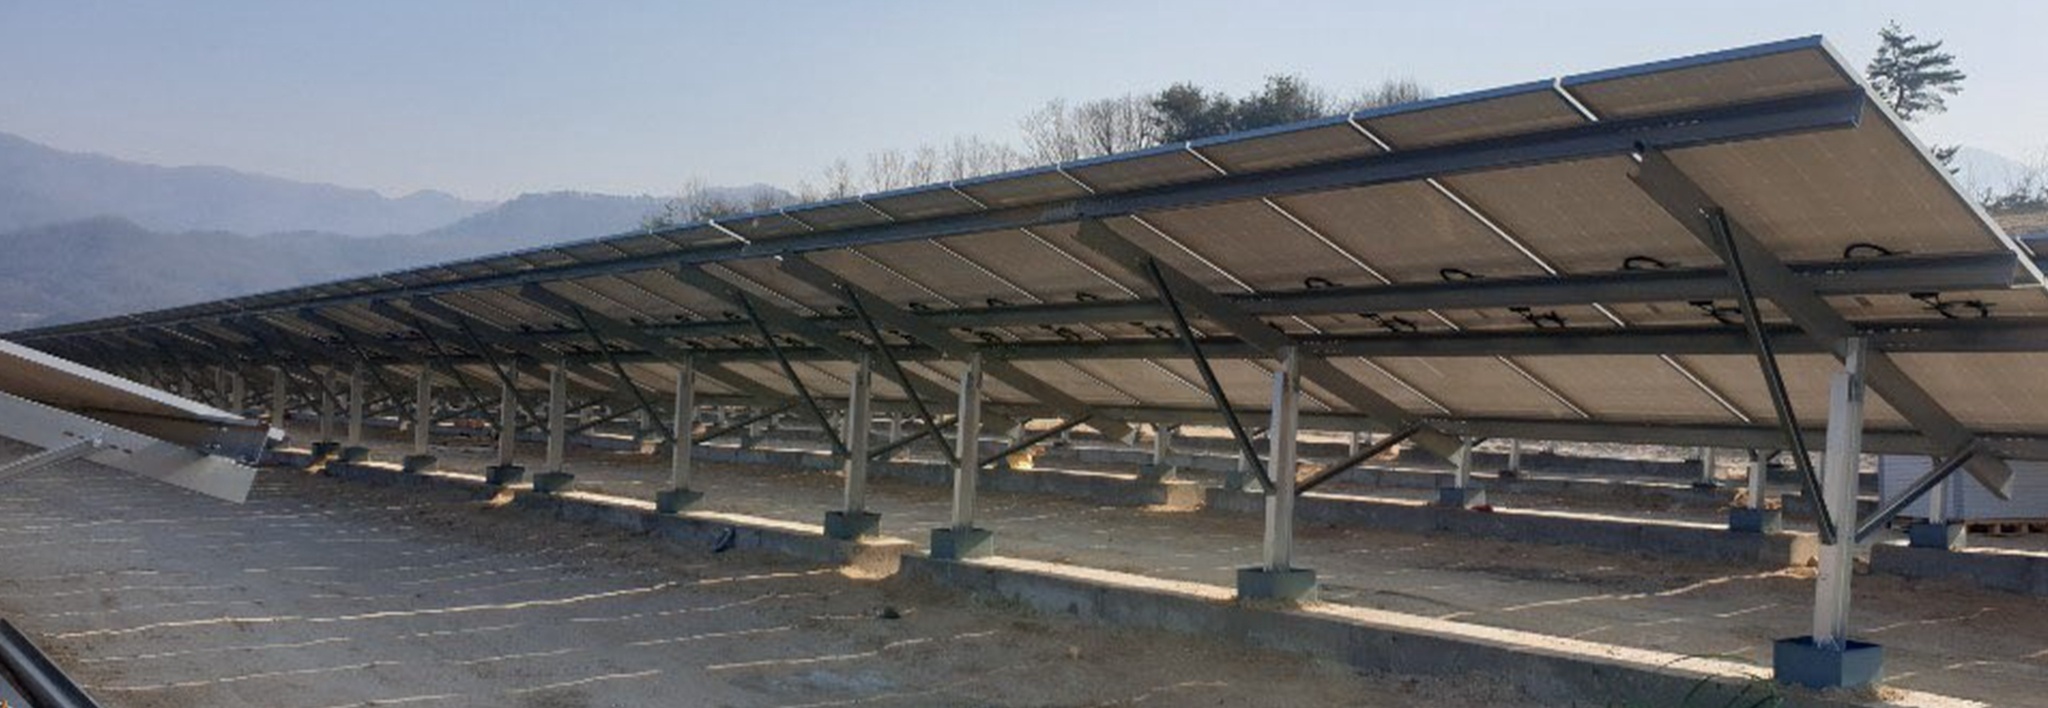 Clenergy-Freiflächenanlage PV-ezRack STMAC 1.6MW Solarprojekt in Korea